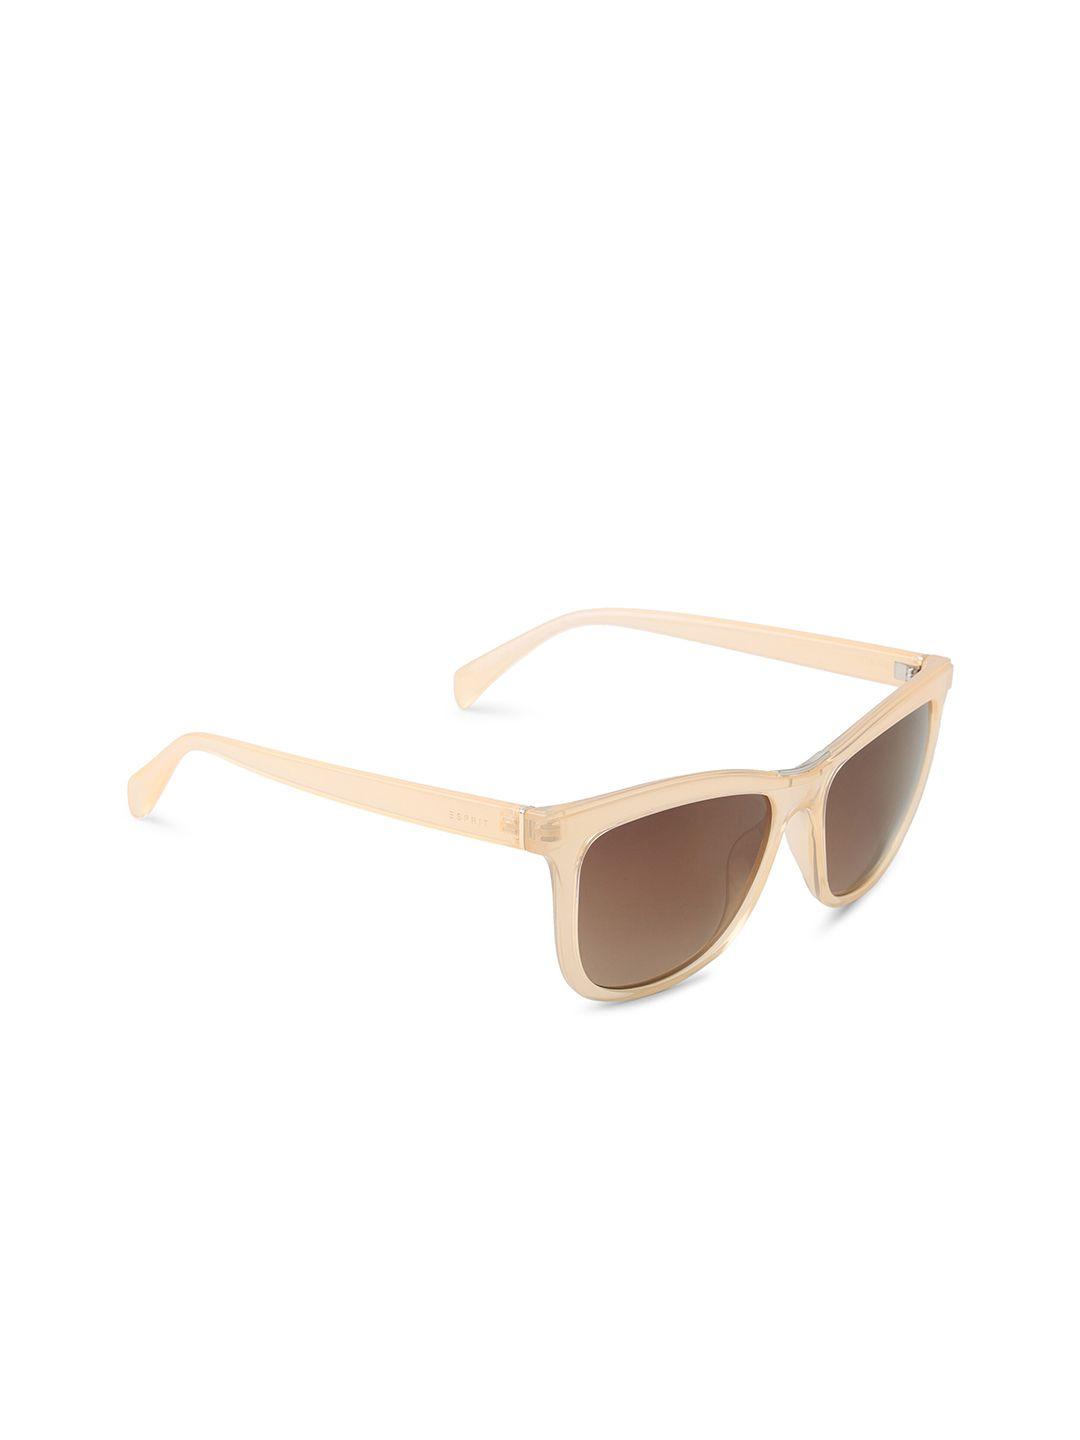 esprit-women-brown-lens-&-beige-cateye-sunglasses-with-uv-protected-lens-et39111-54-565